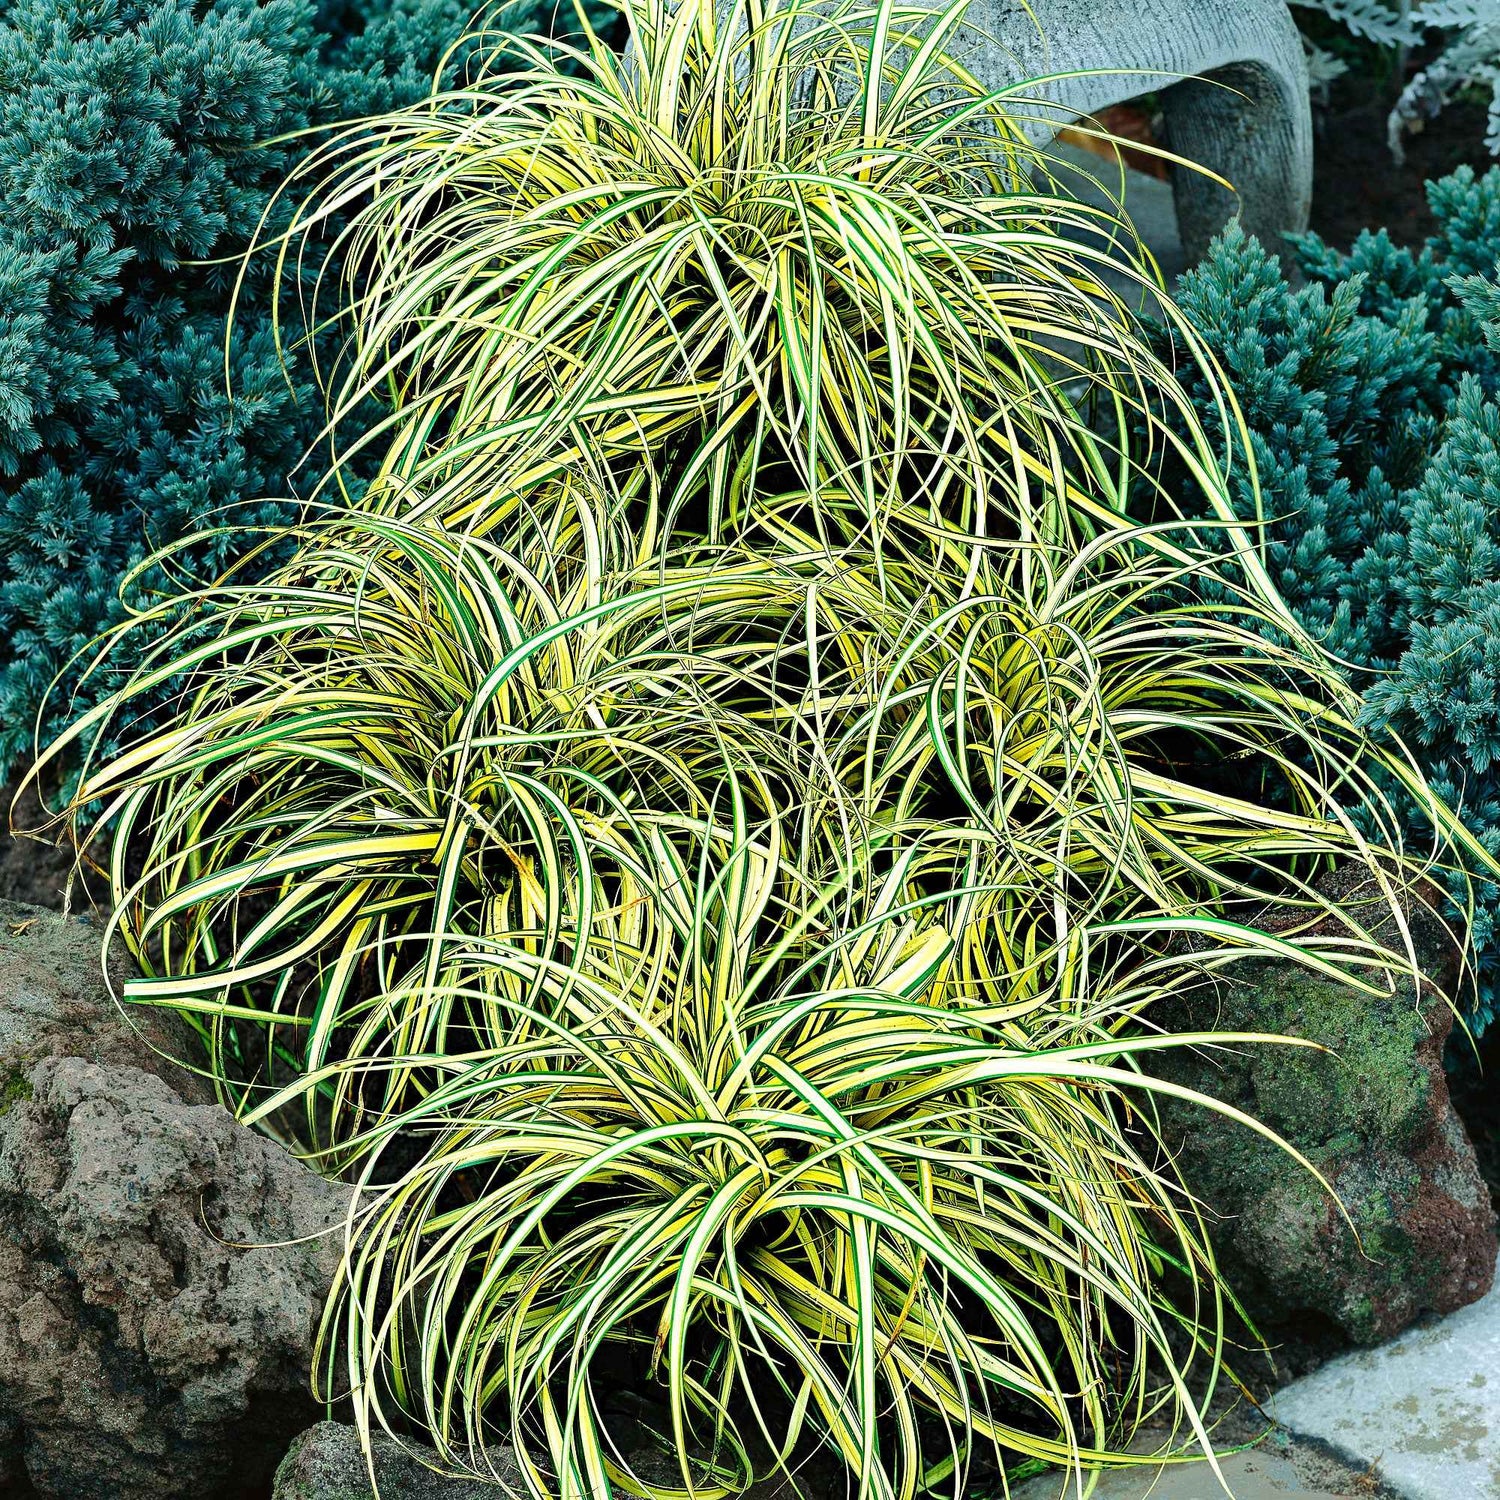 Zegge - Carex